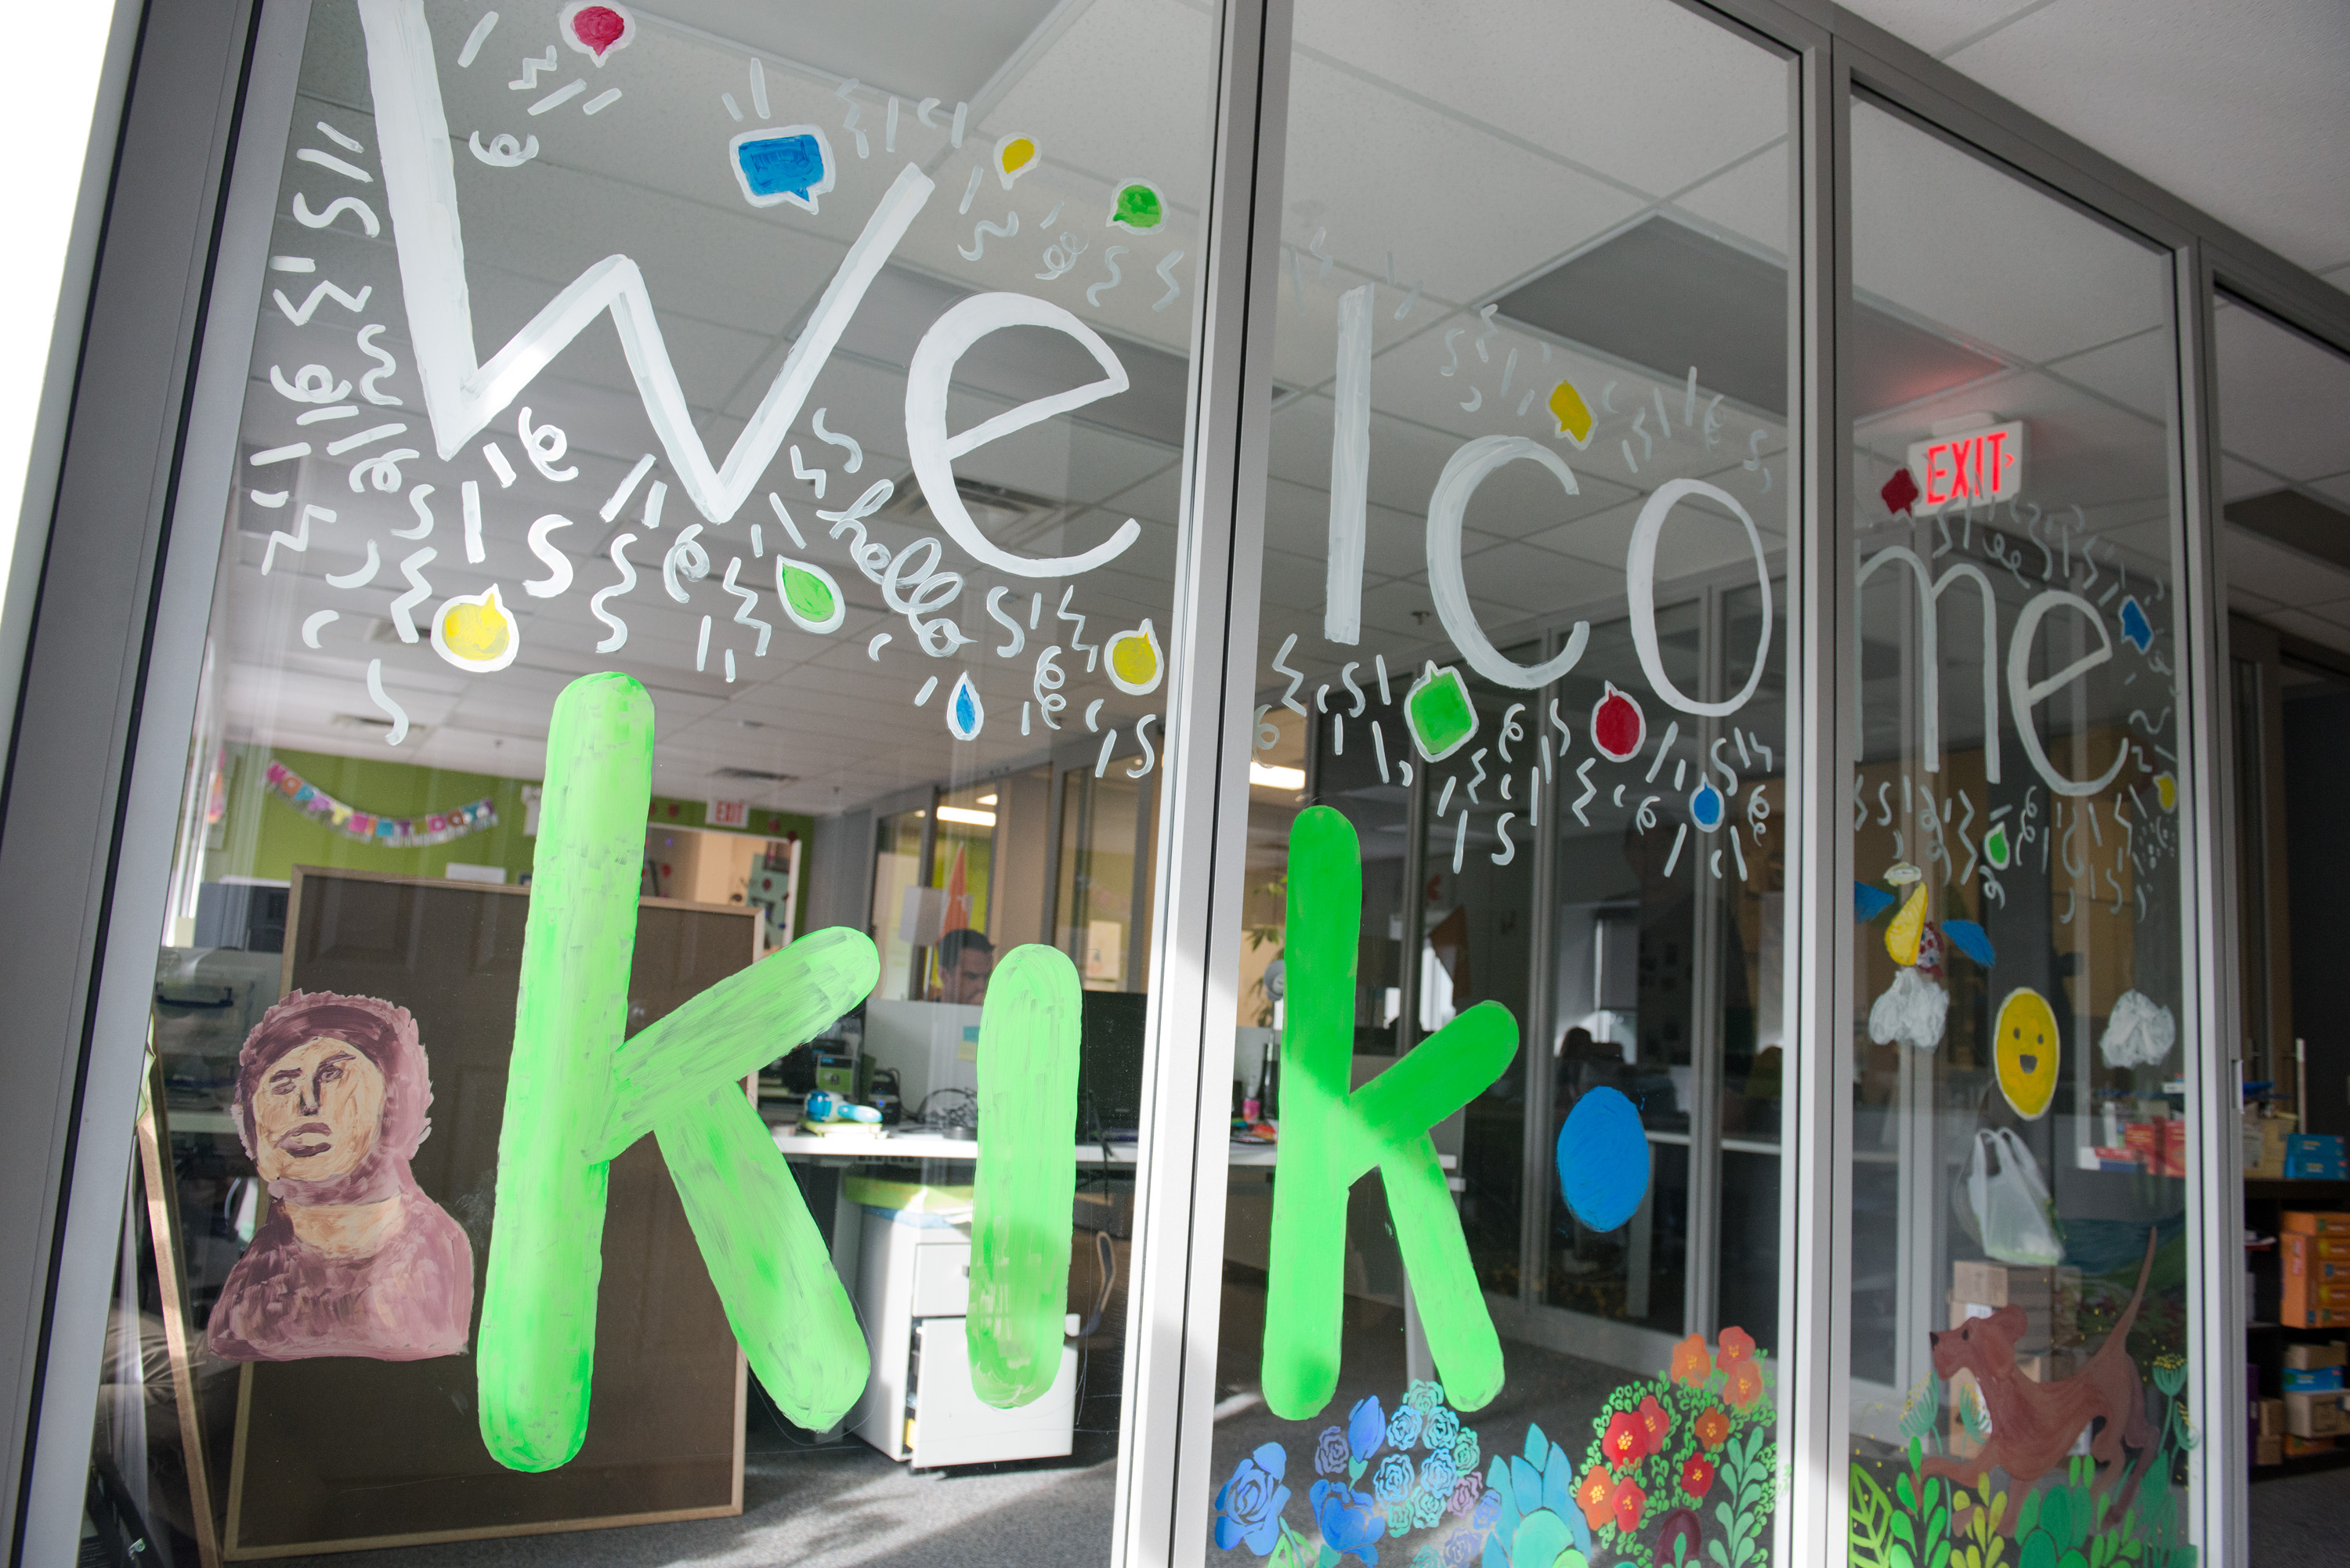 Kik raises nearly $100M in highest profile ICO to date